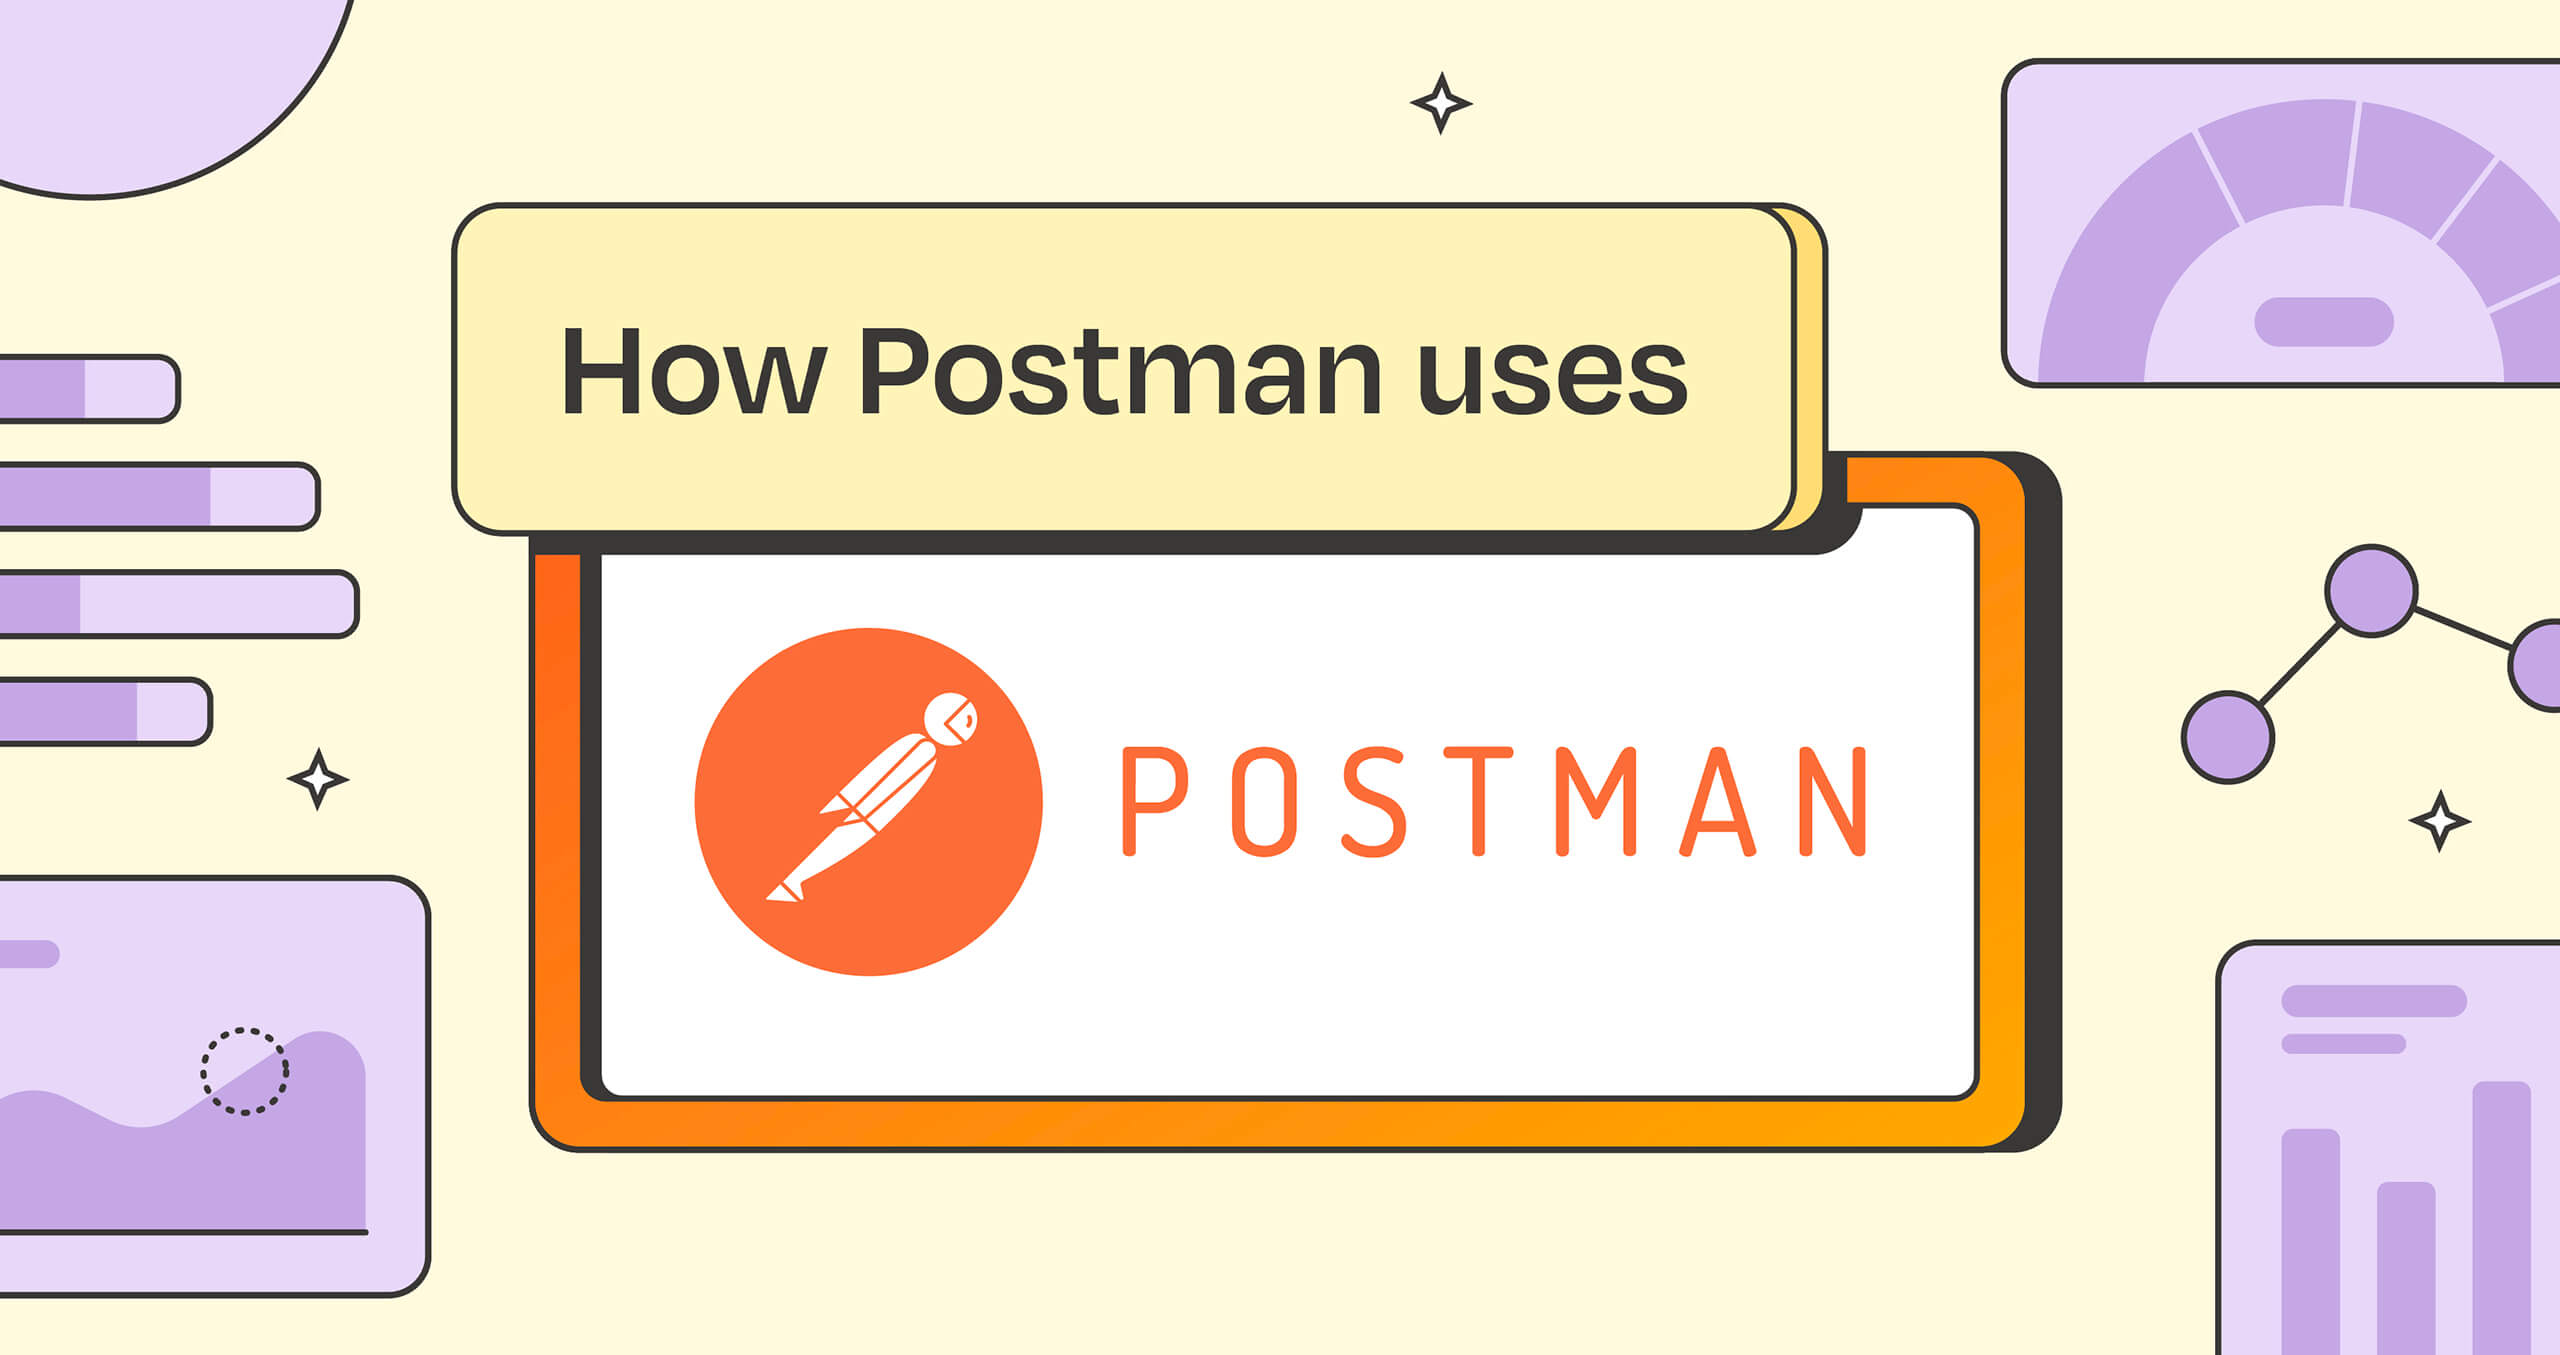 How Postman uses Postman. Illustration.